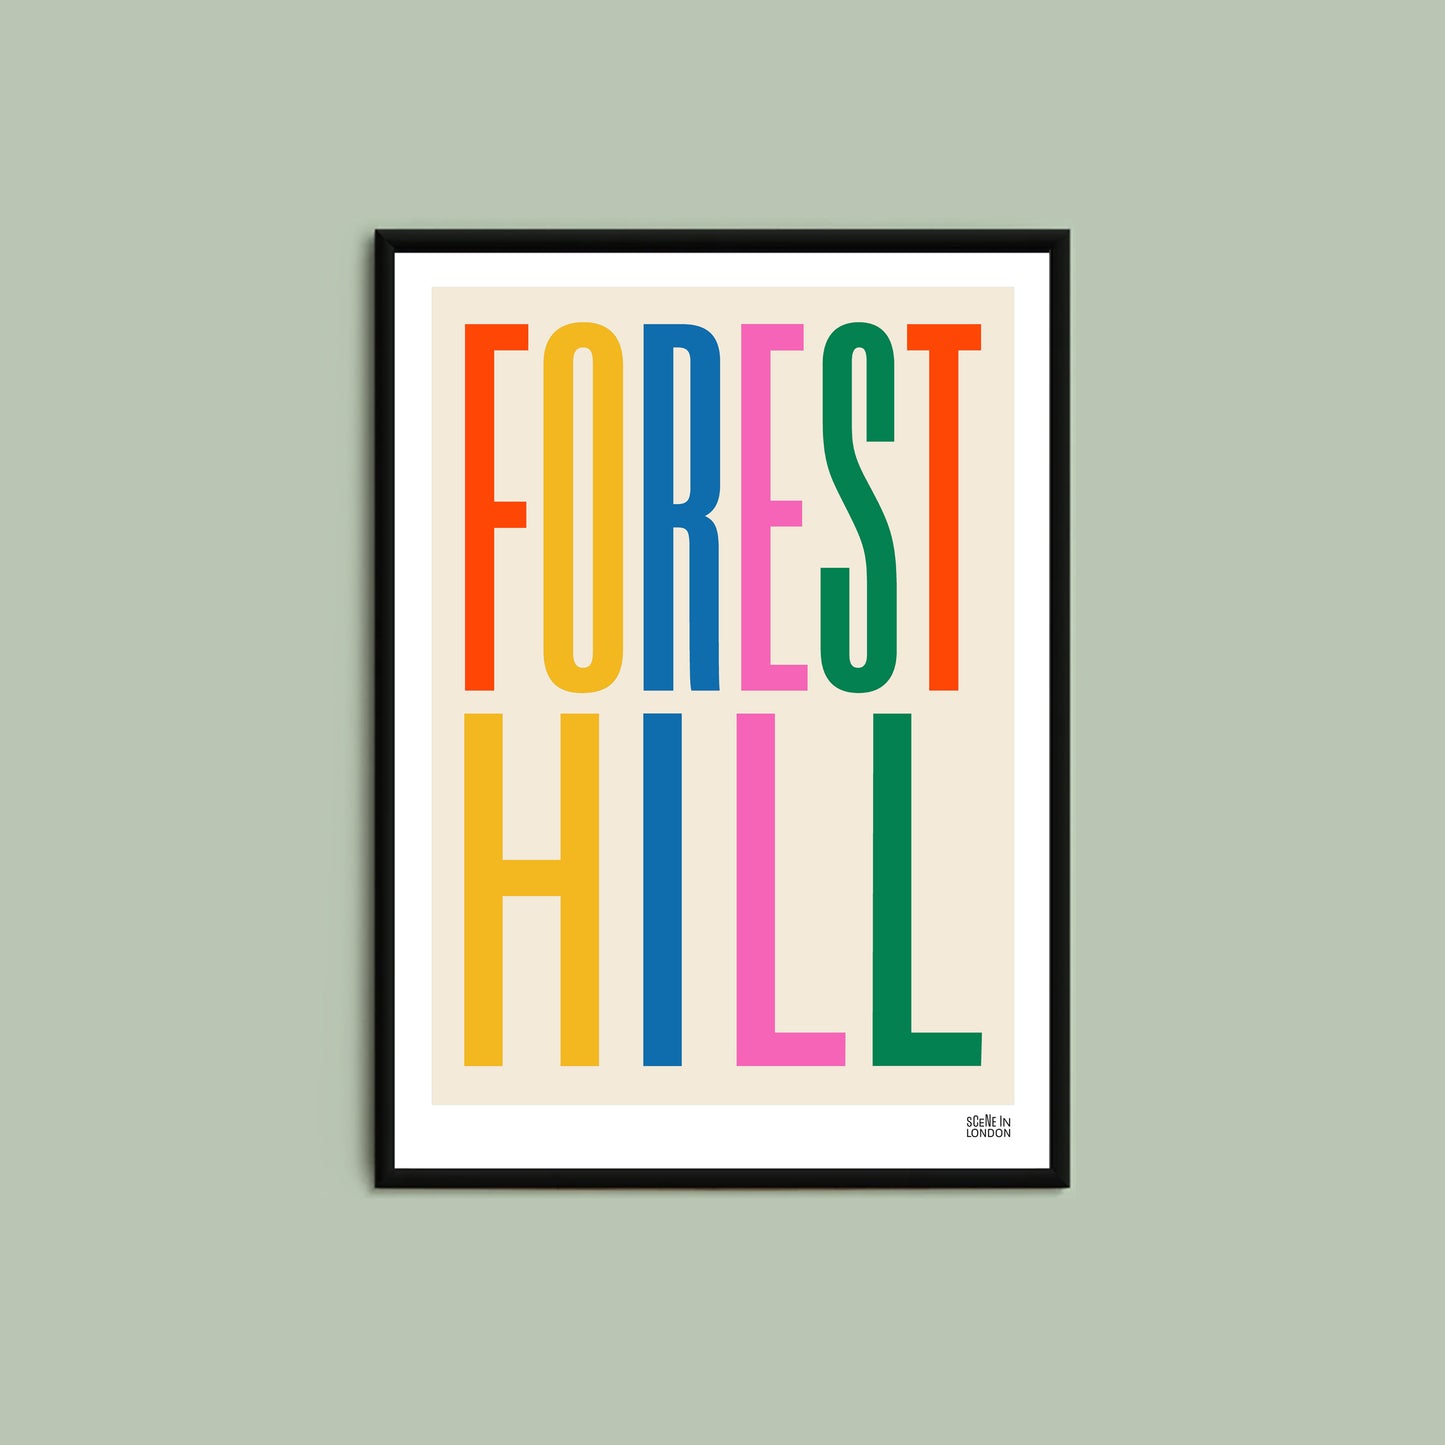 Forest Hill modern poster